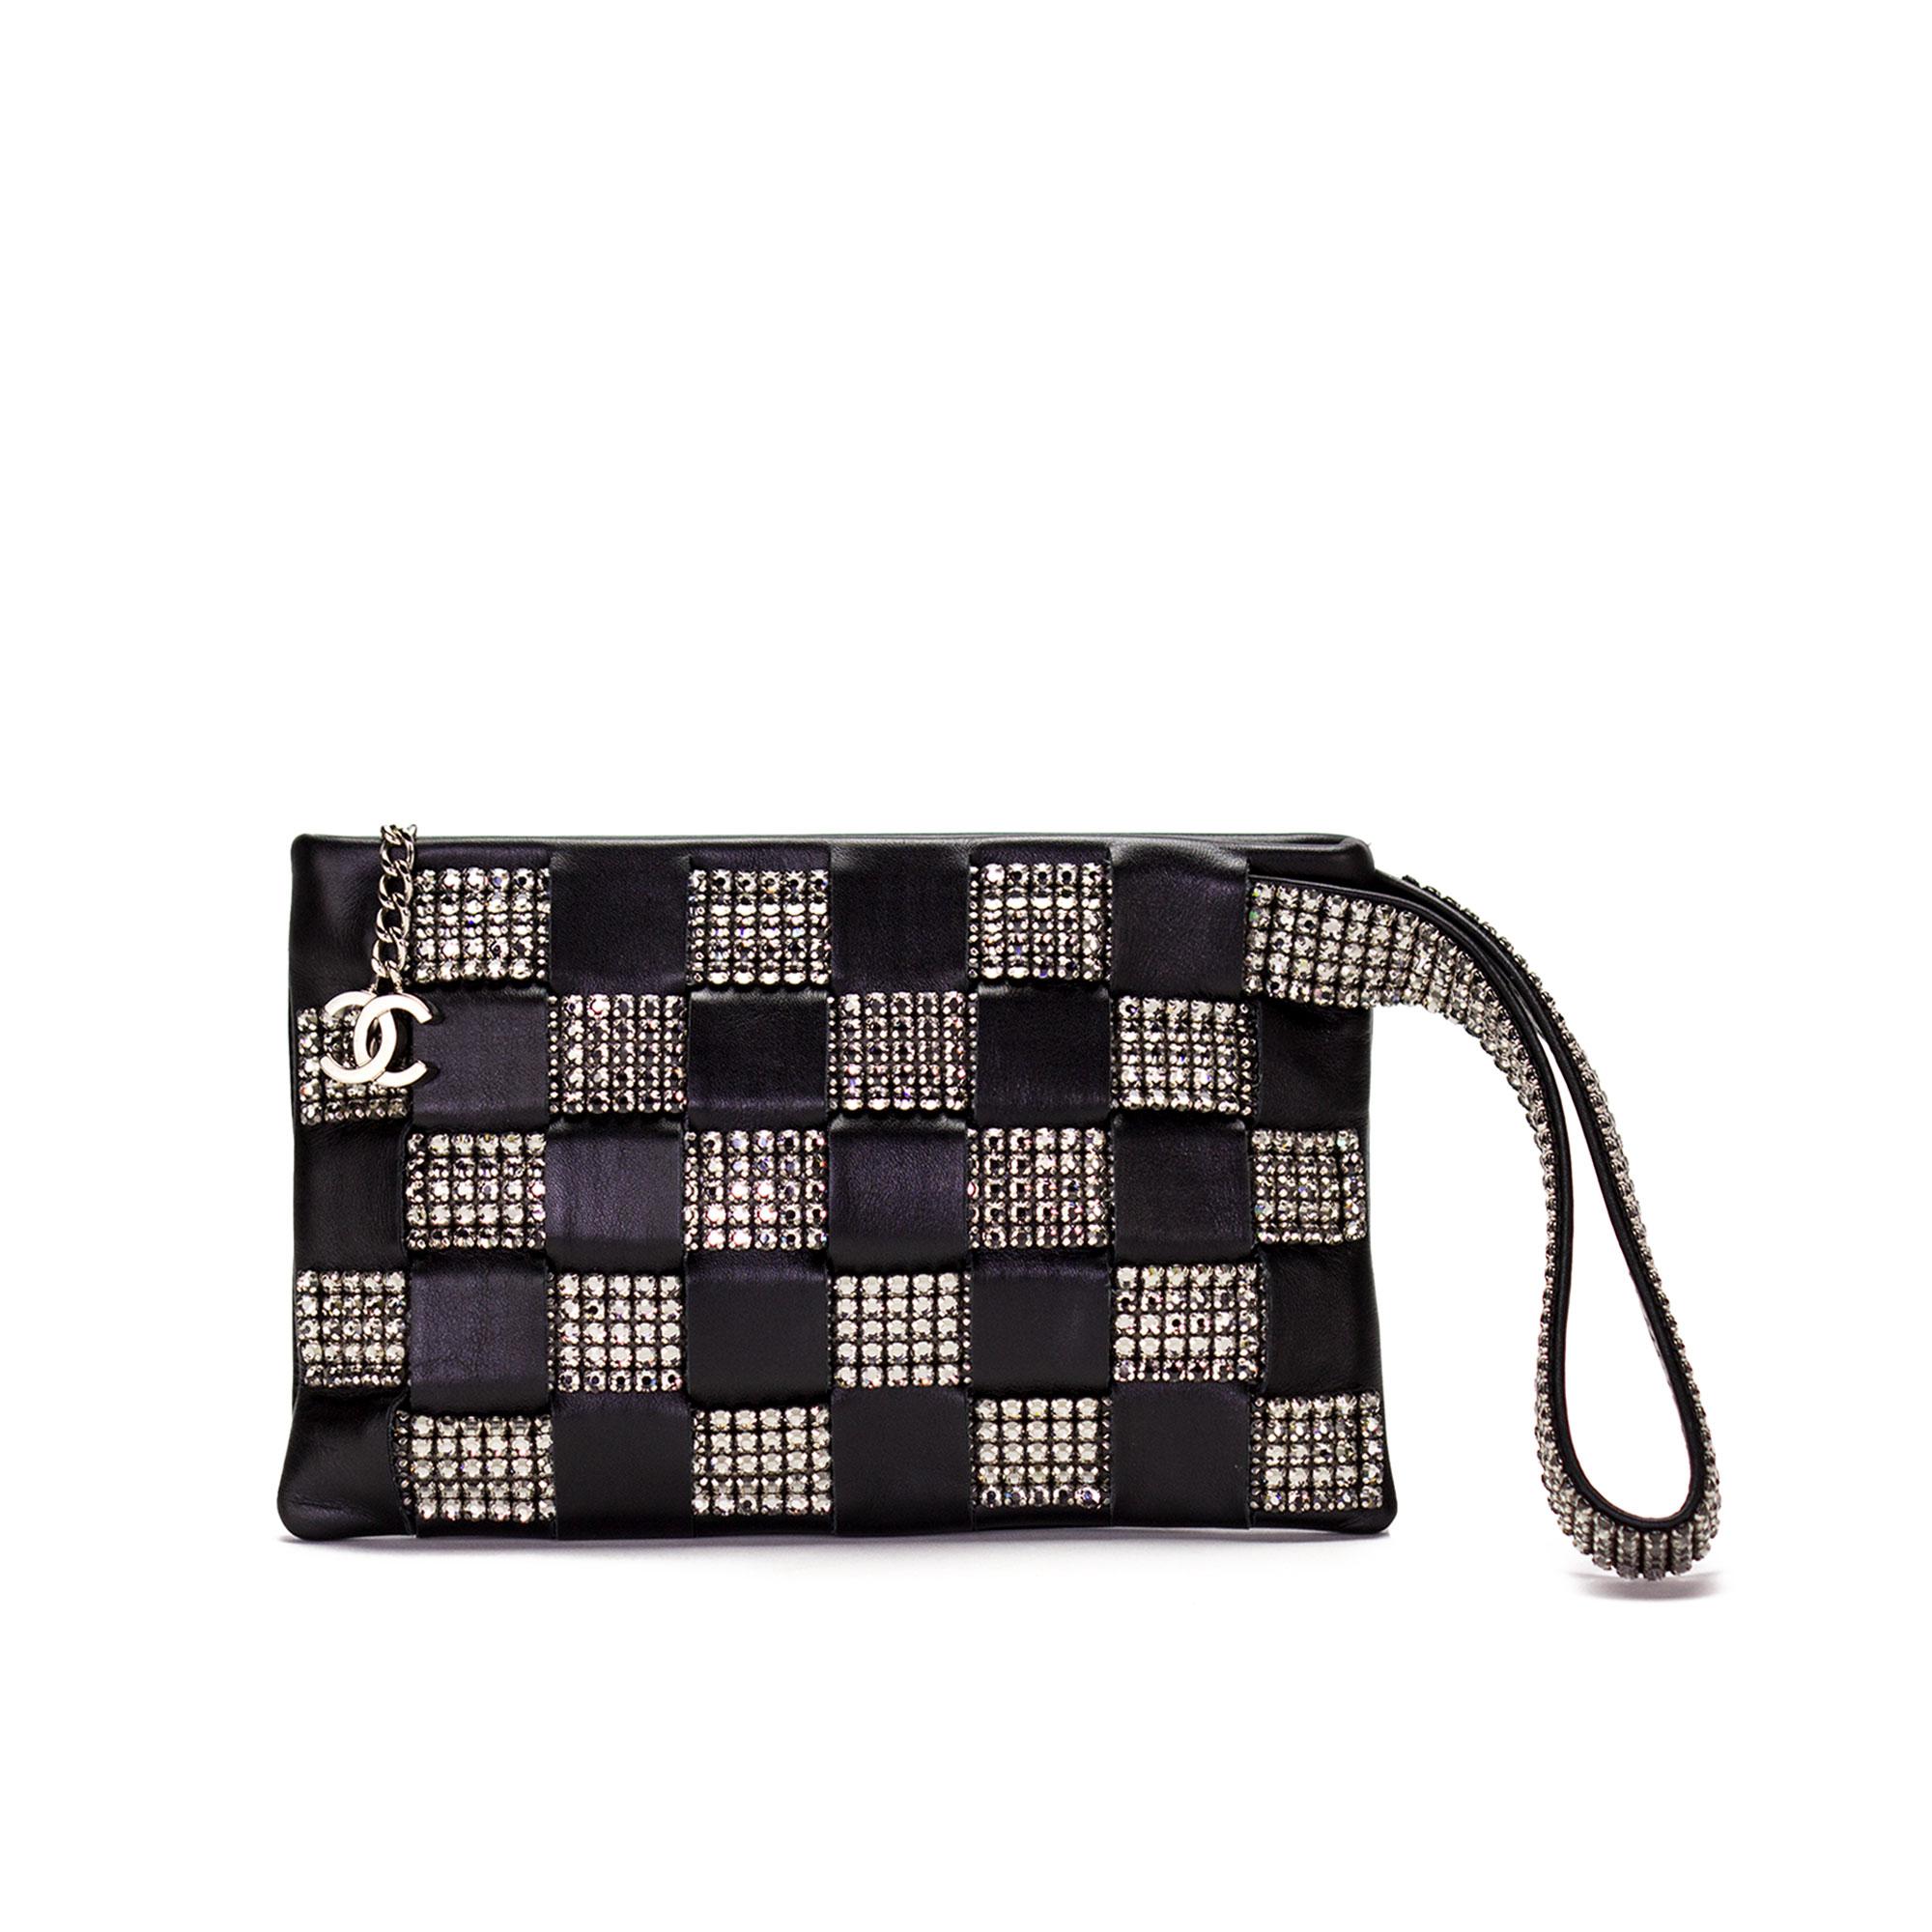 Black Chanel 2005 Vintage Lambskin Leather Swarovski CC Crystals Clutch Evening Bag For Sale